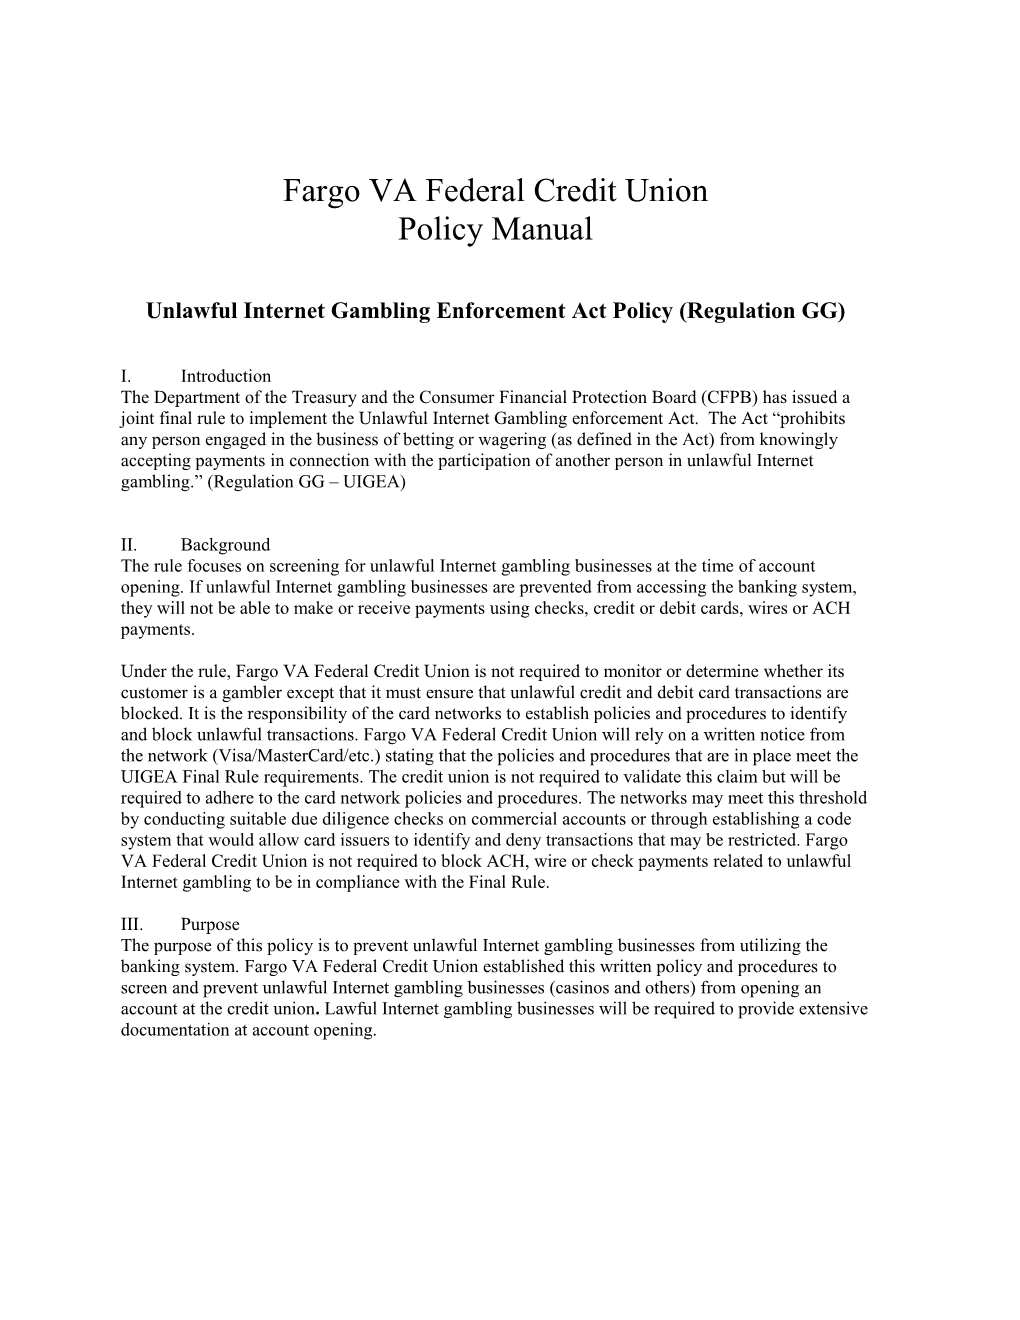 Unlawful Internet Gambling Enforcement Act Policy (Regulation GG)